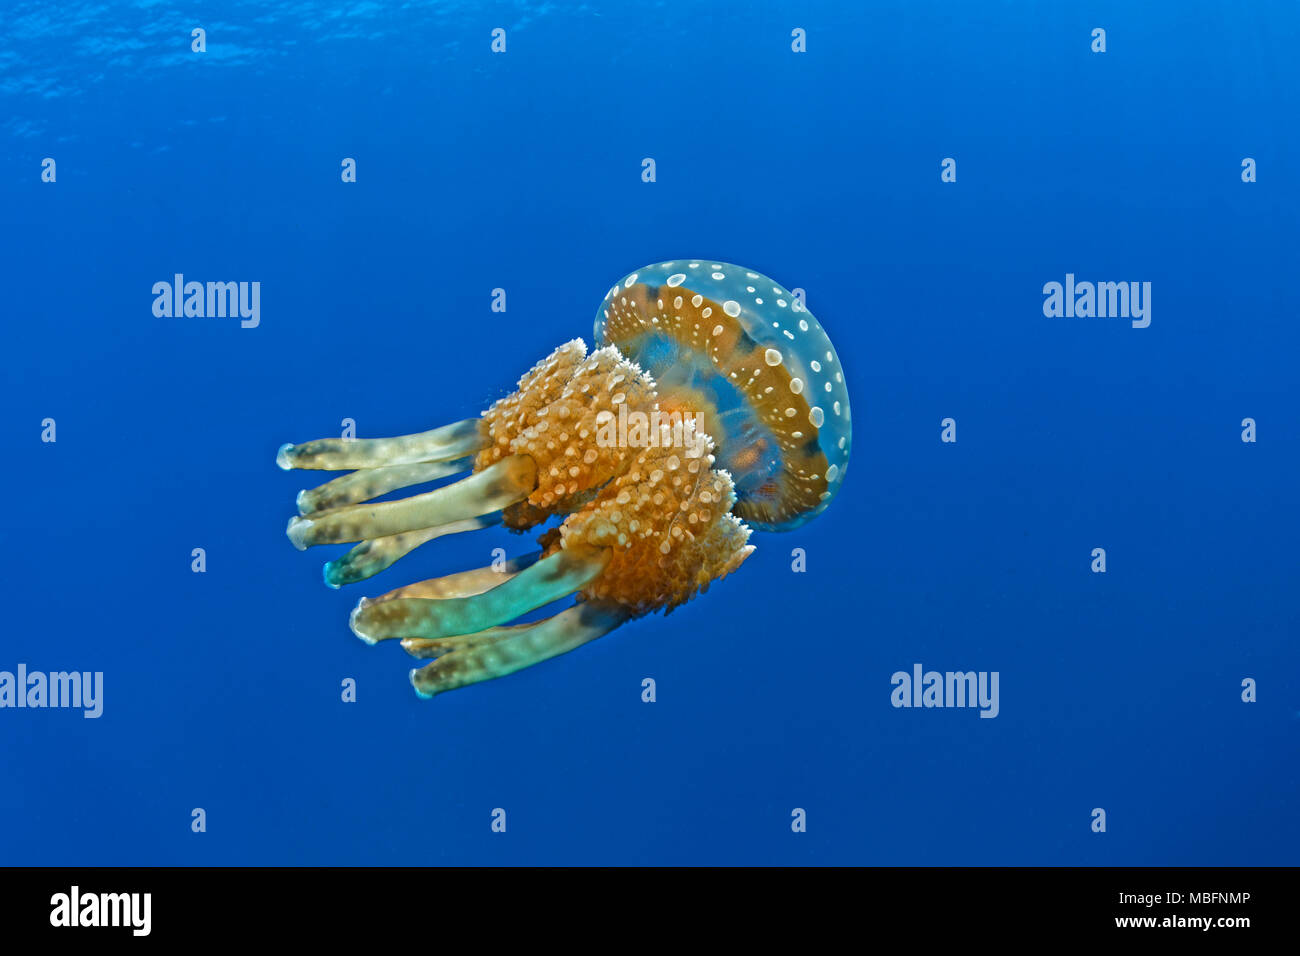 Mastigias-Schirmqualle (Mastigias papua), Palau, Mikronesien | Mastigias jellyfish (Mastigias papua), Palau, Micronesia Stock Photo